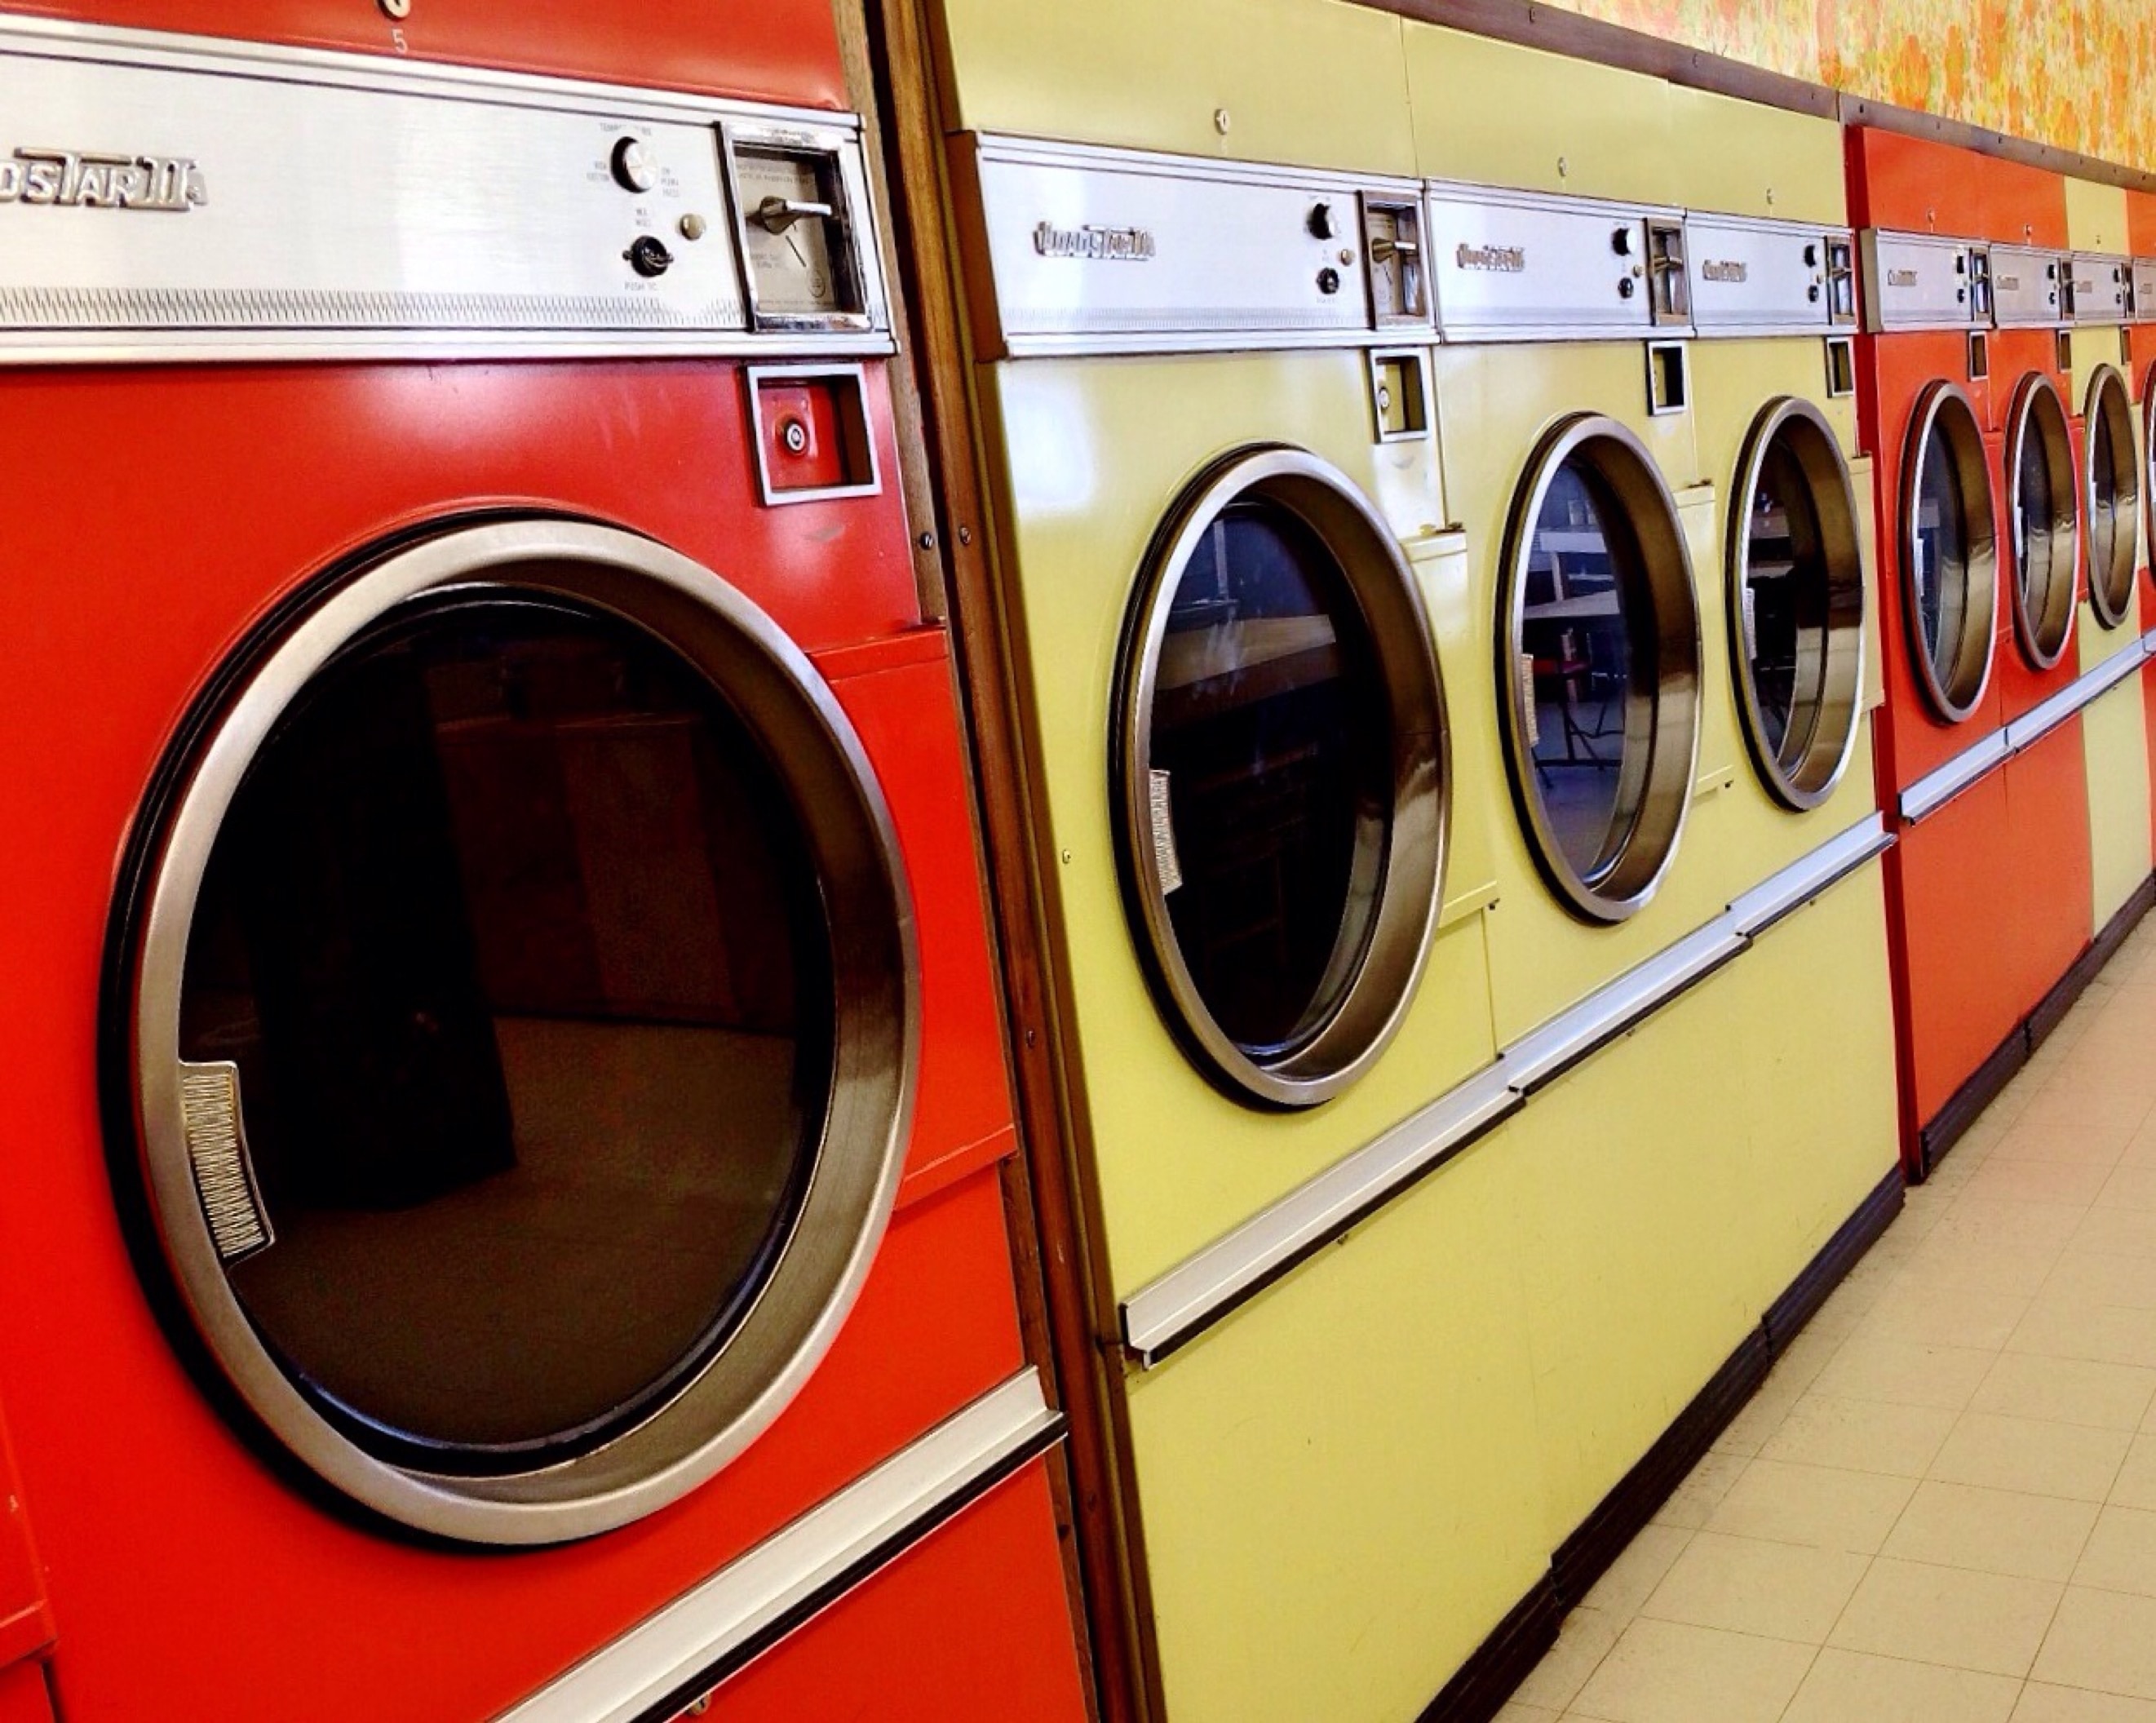 laundromat washer dryer machine wallpaper